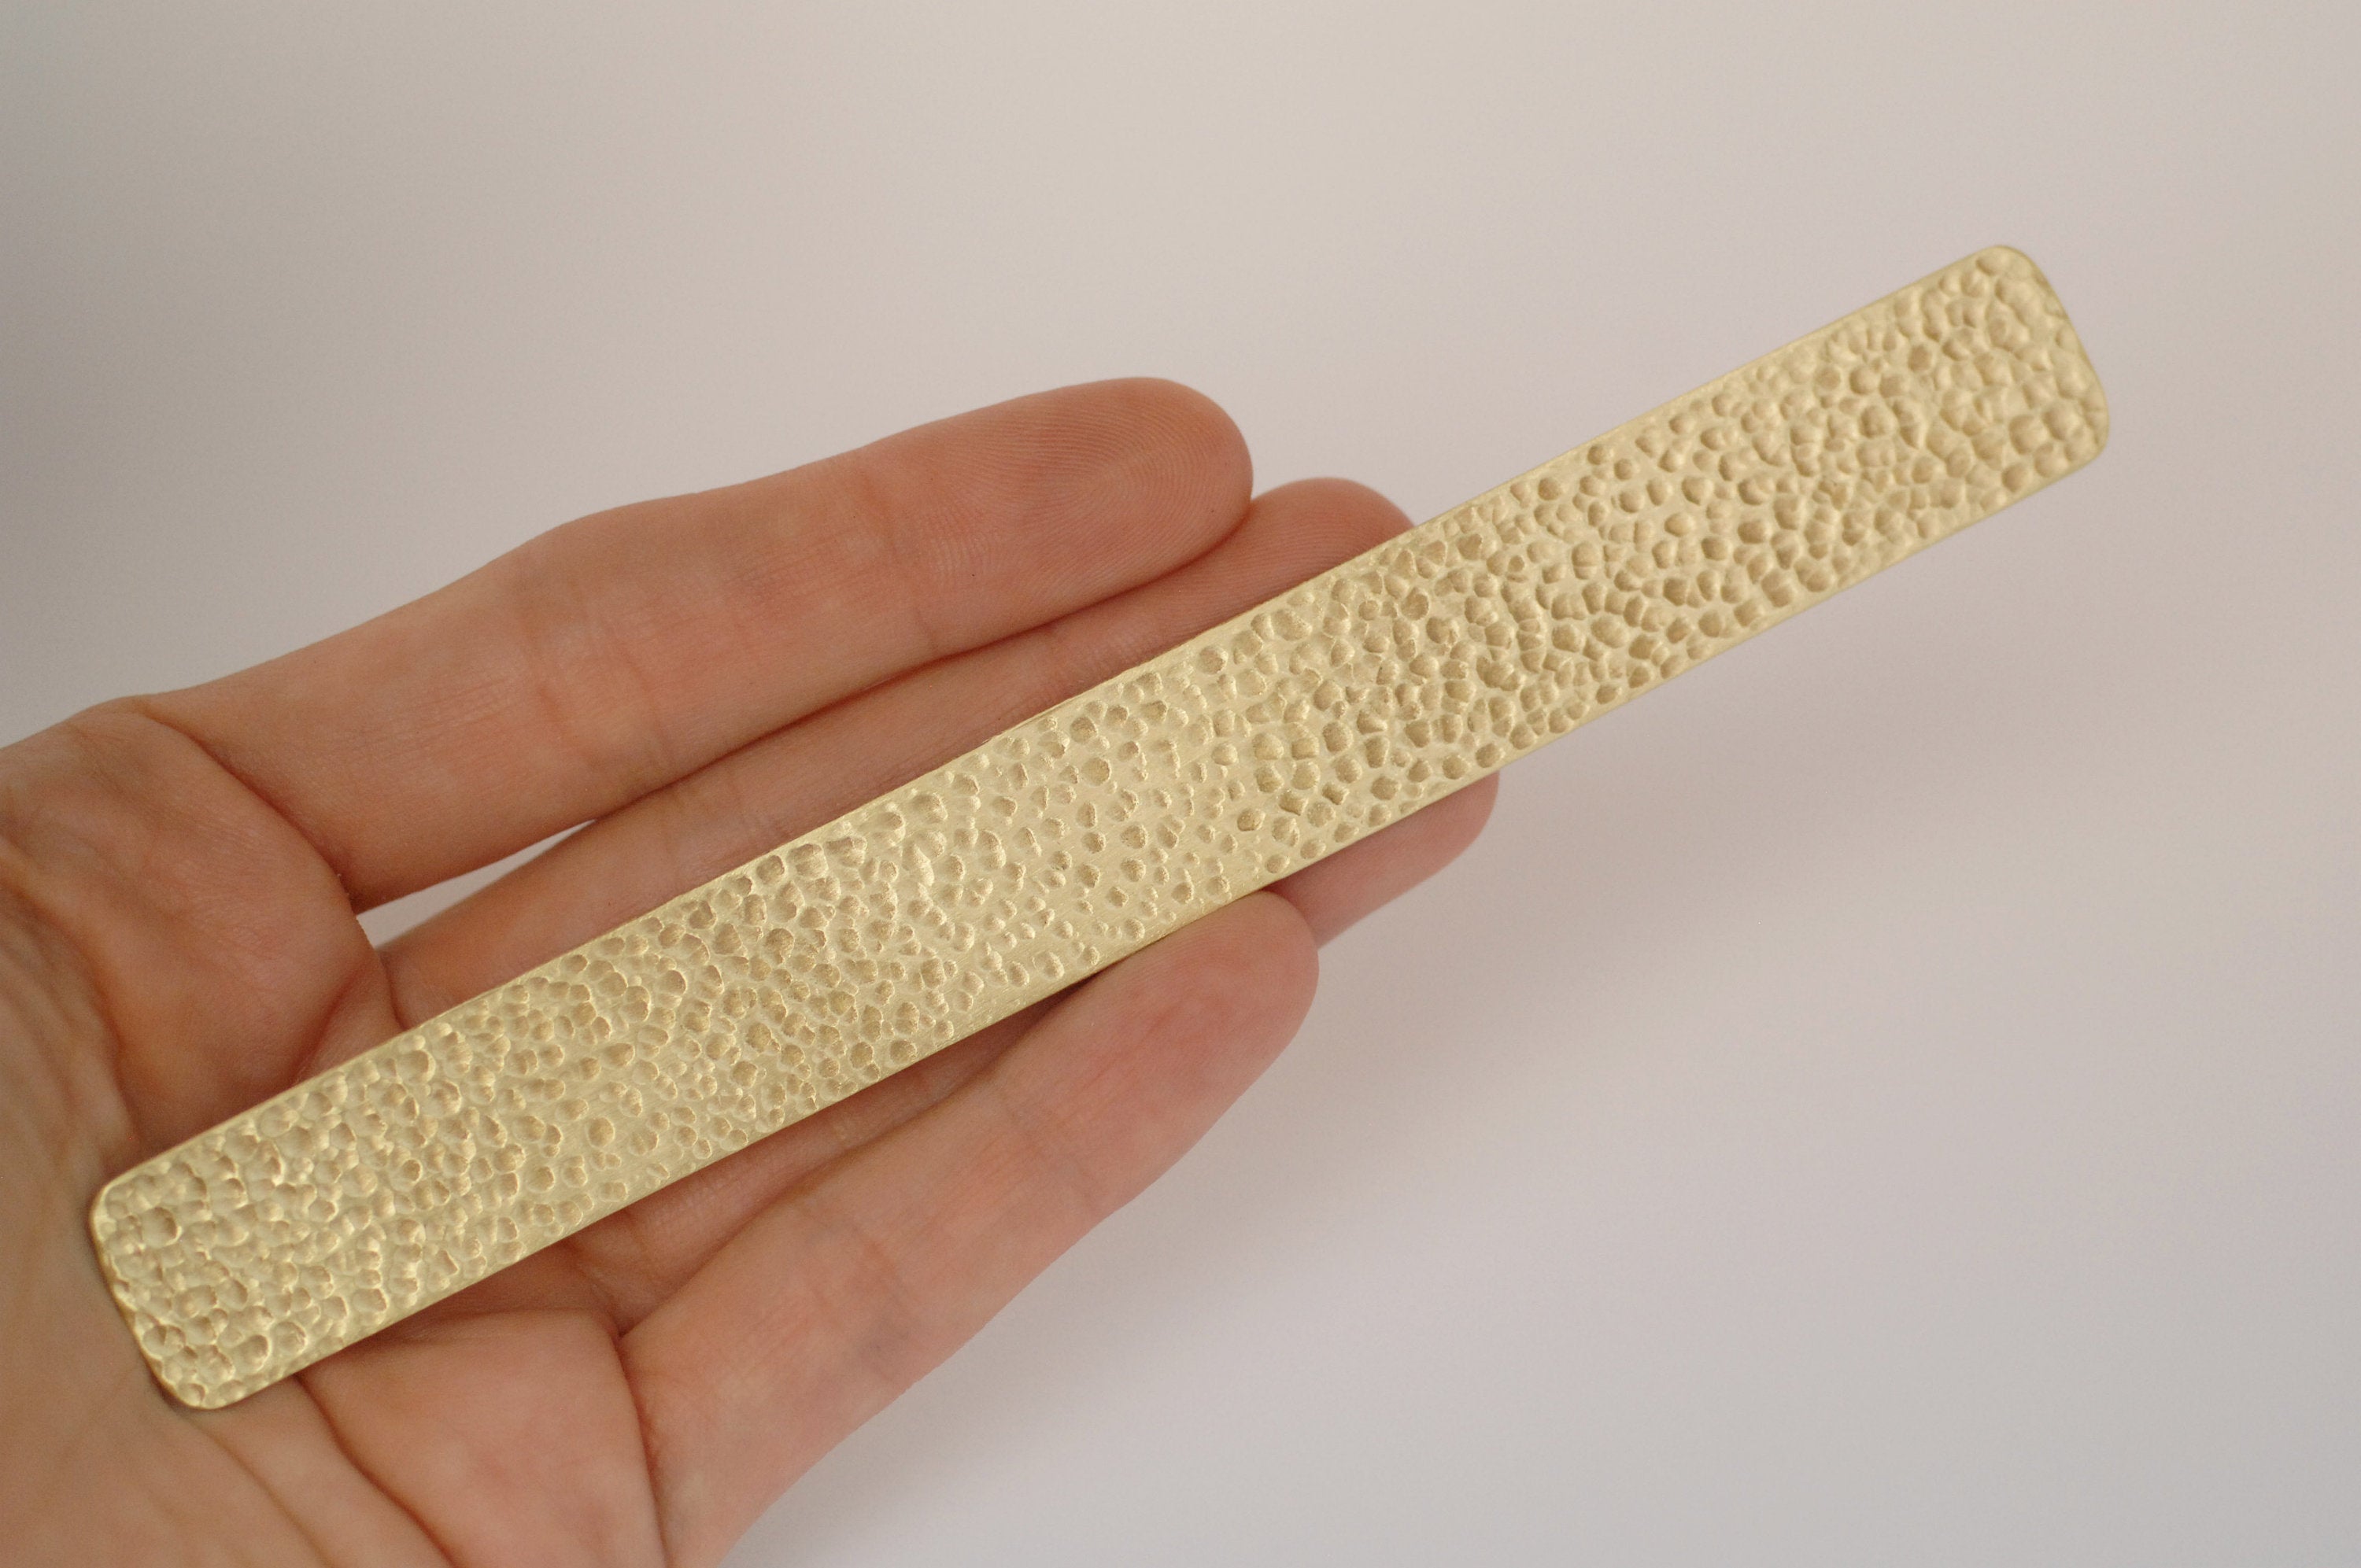 Hammered Cuff Strip Bracelet Blanks - DIY Bracelet 3/4 inch by 6 inch long